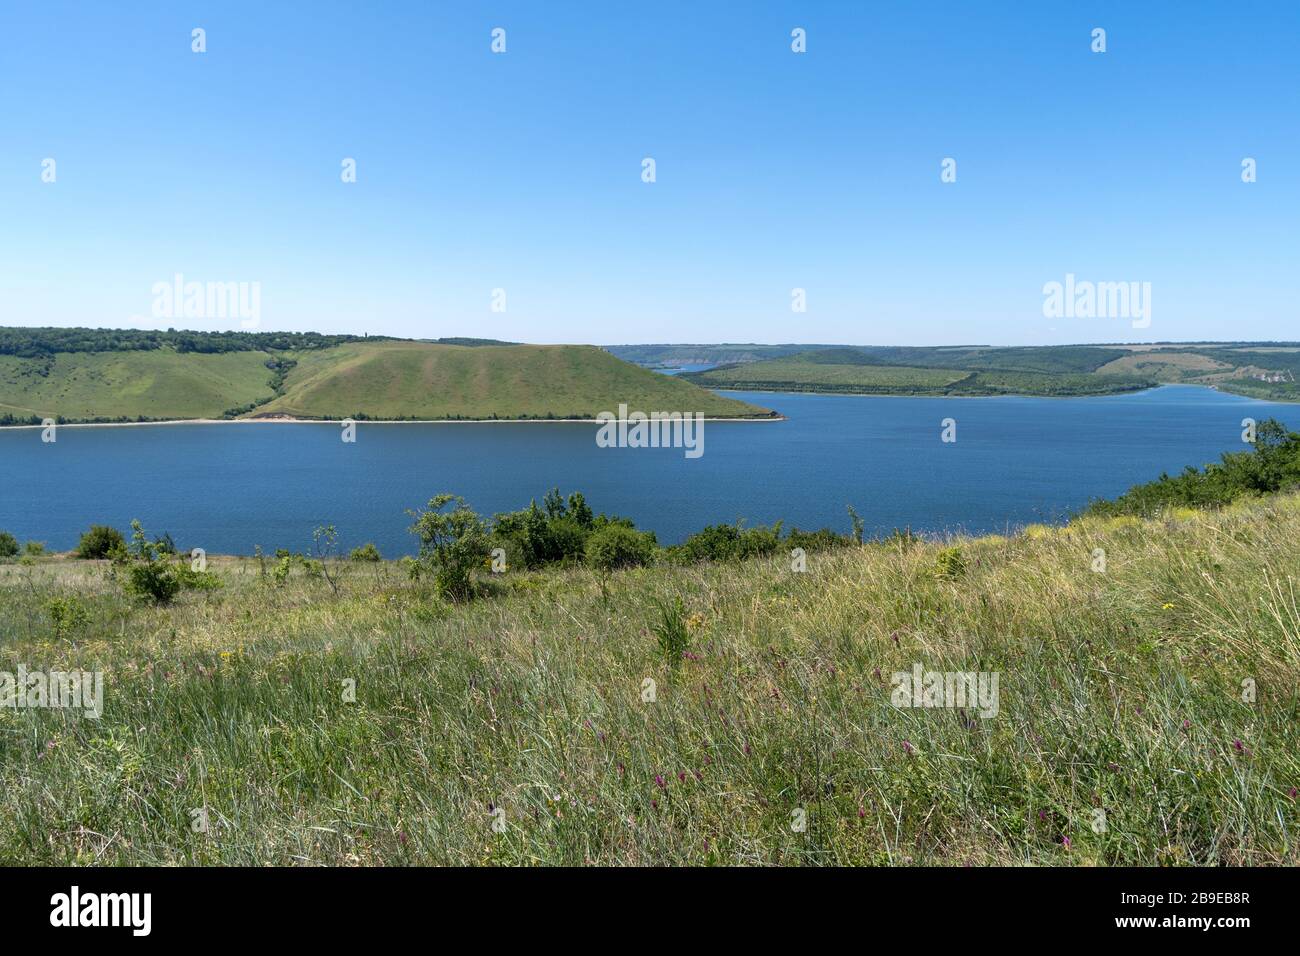 Dniester river, Ukraine, high angle view Stock Photo